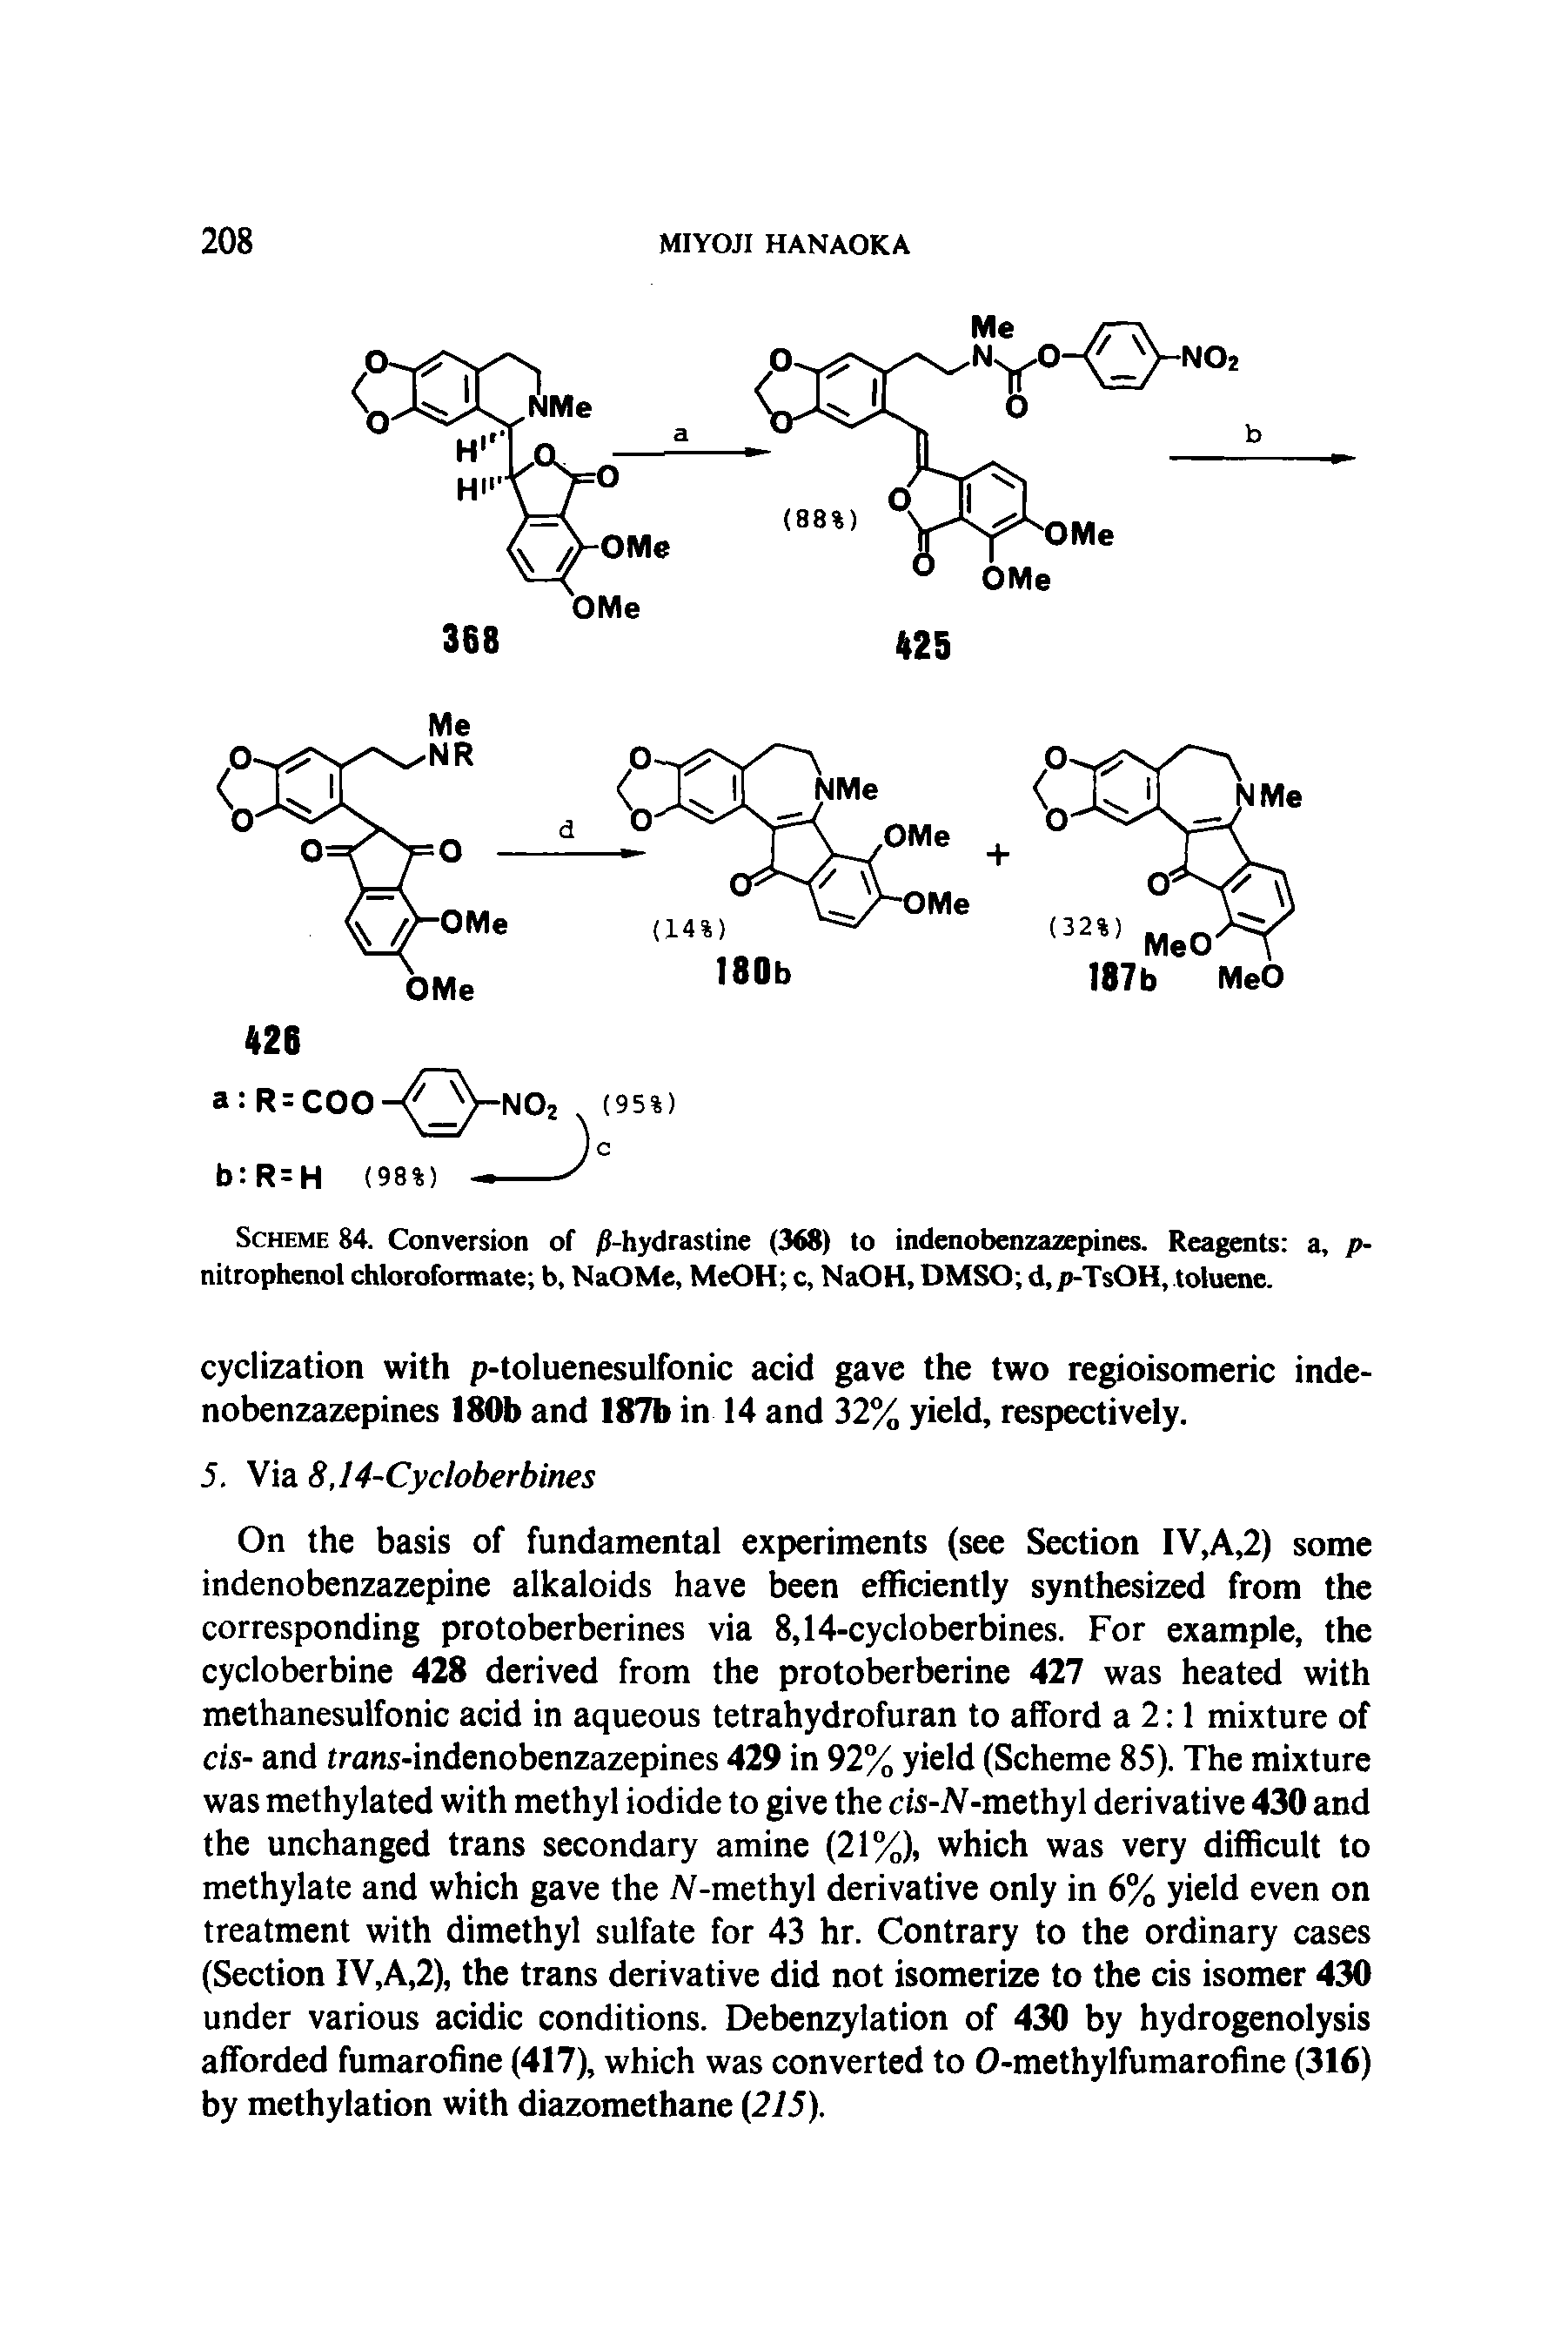 Scheme 84. Conversion of /3-hydrastine (368) to indenobenzazepines. Reagents a, p-nitrophenol chloroformate b, NaOMe, MeOH c, NaOH, DMSO d, p-TsOH, toluene.